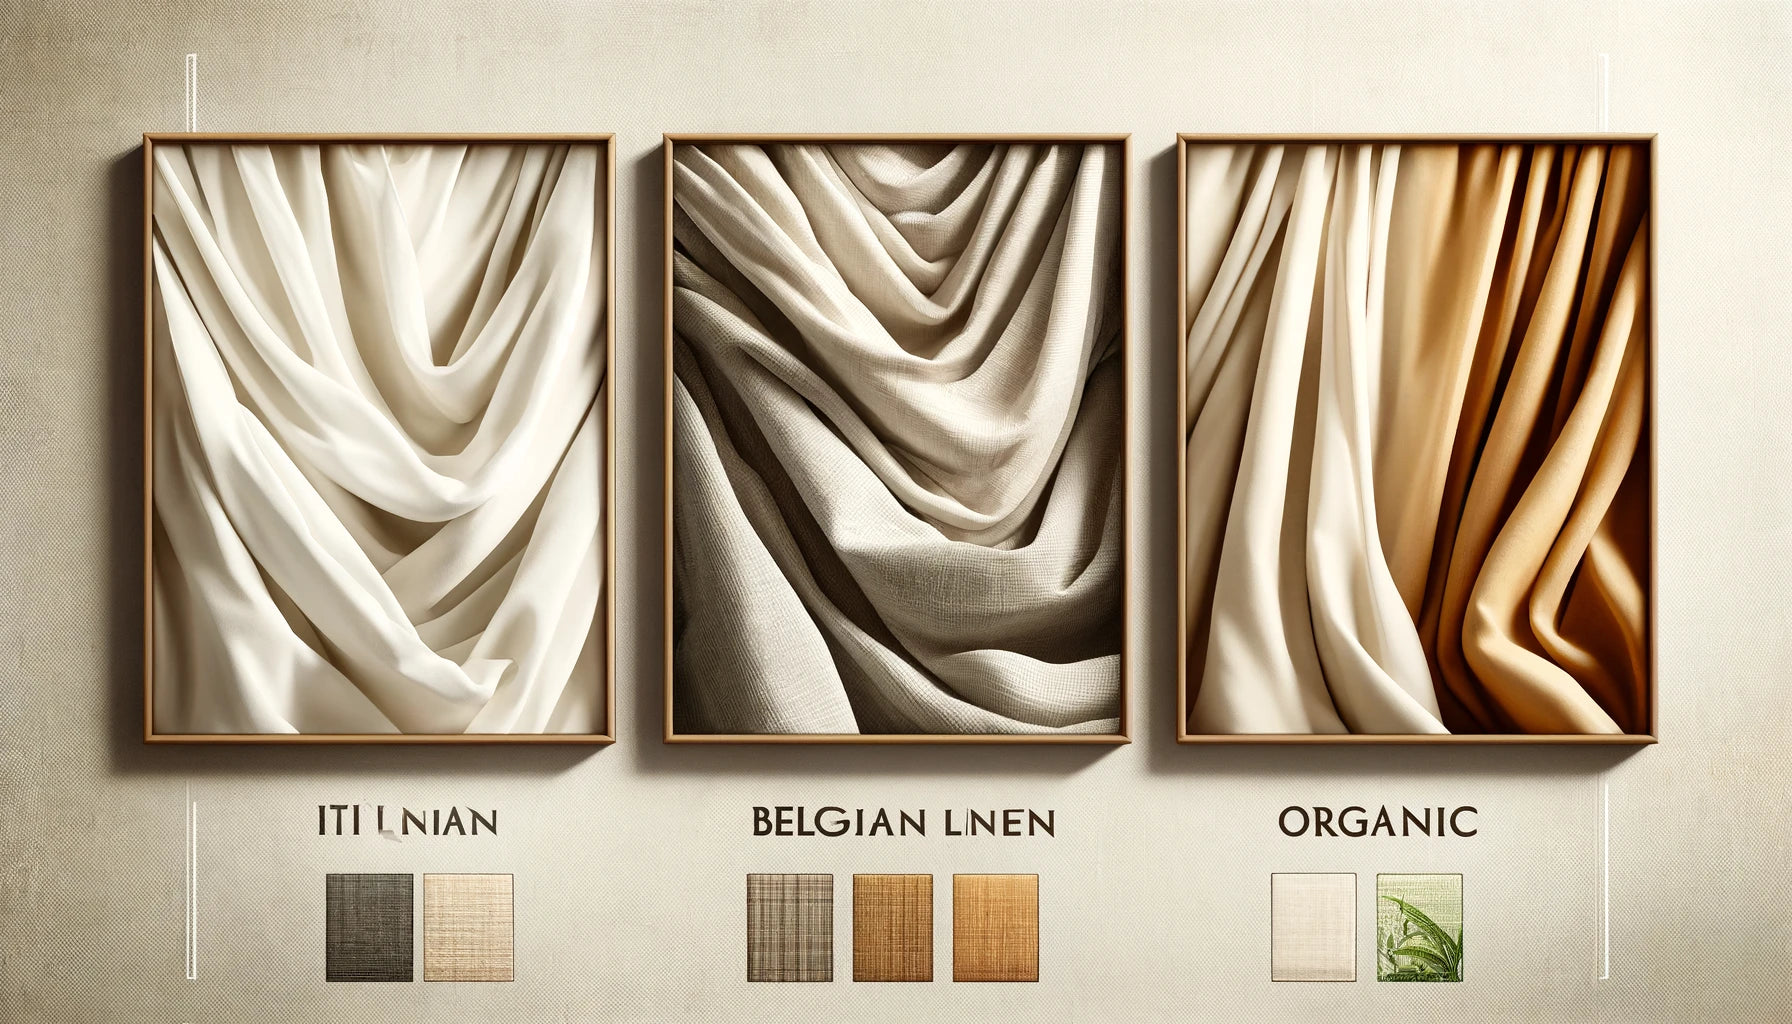 difference between organic,italian and belgian linen